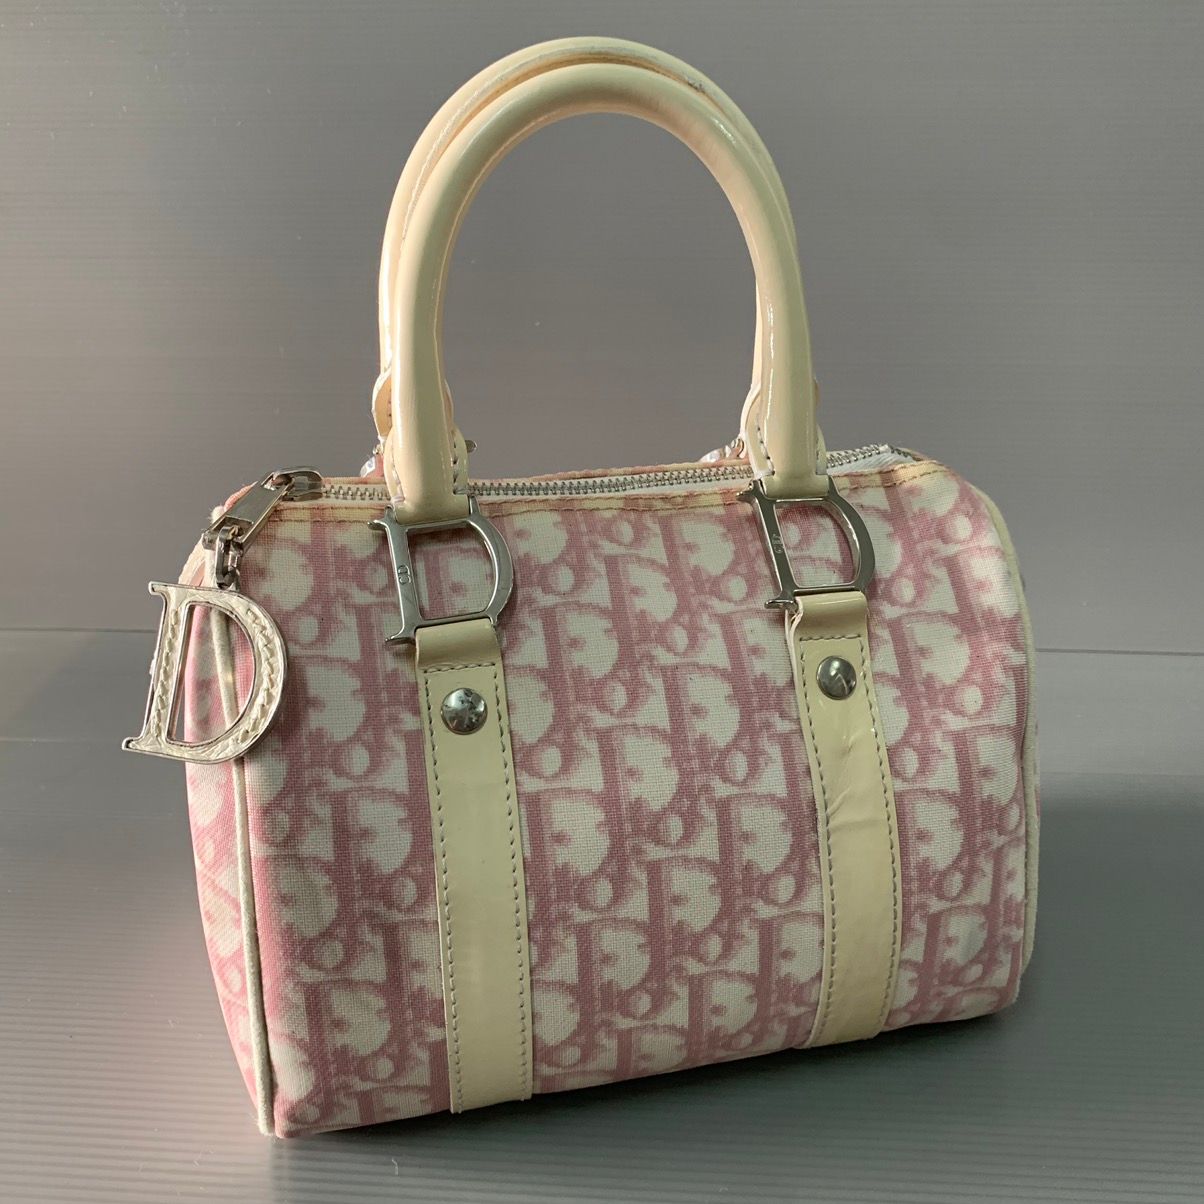 Dior 💥🔥HOT ITEM🔥💥Authentic Christian Dior Mini Speedy Bag